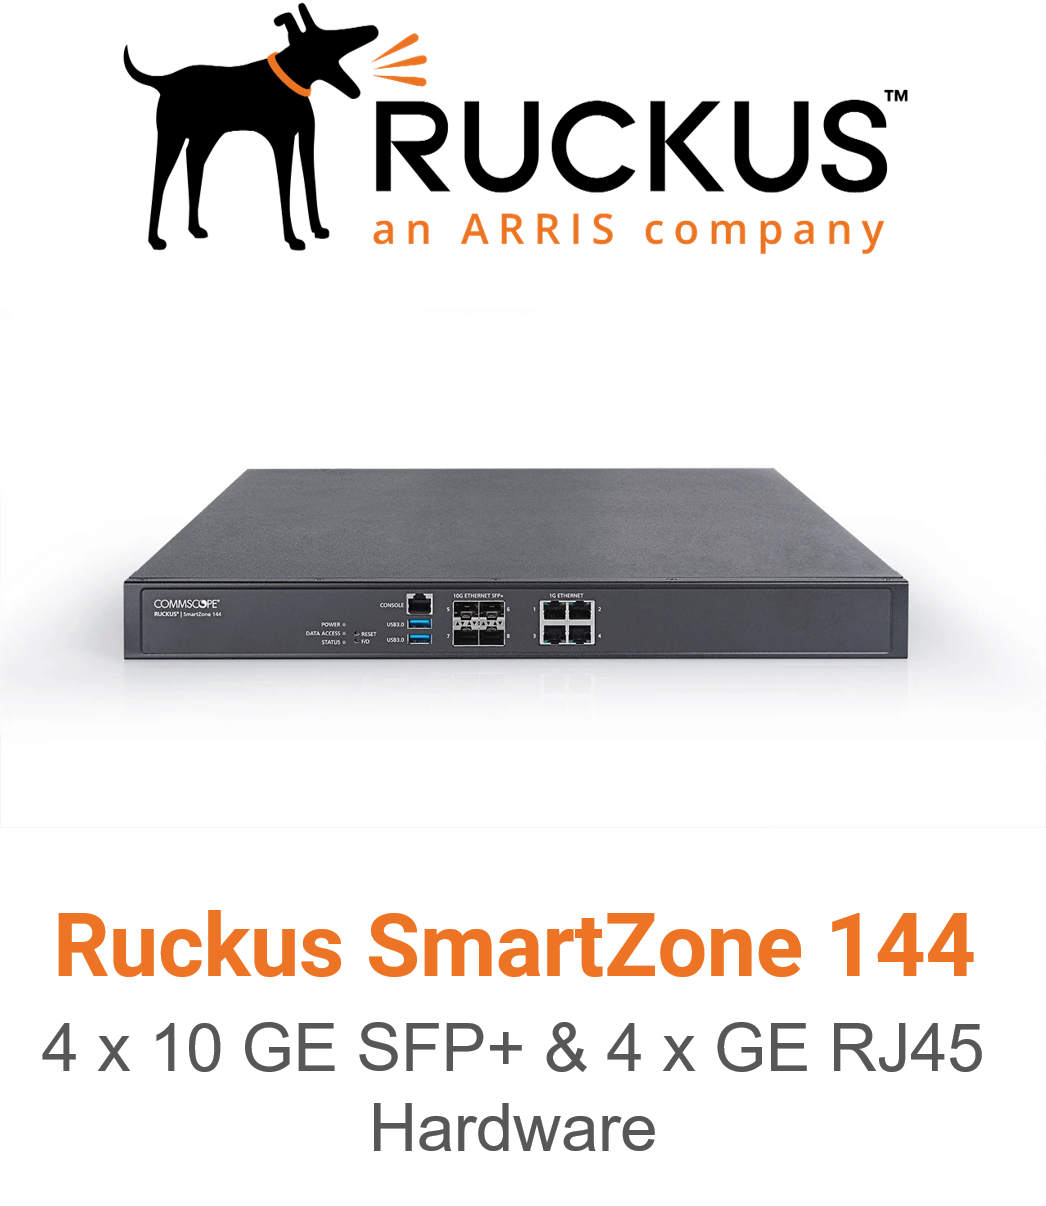 Ruckus Smartzone 144 Controller